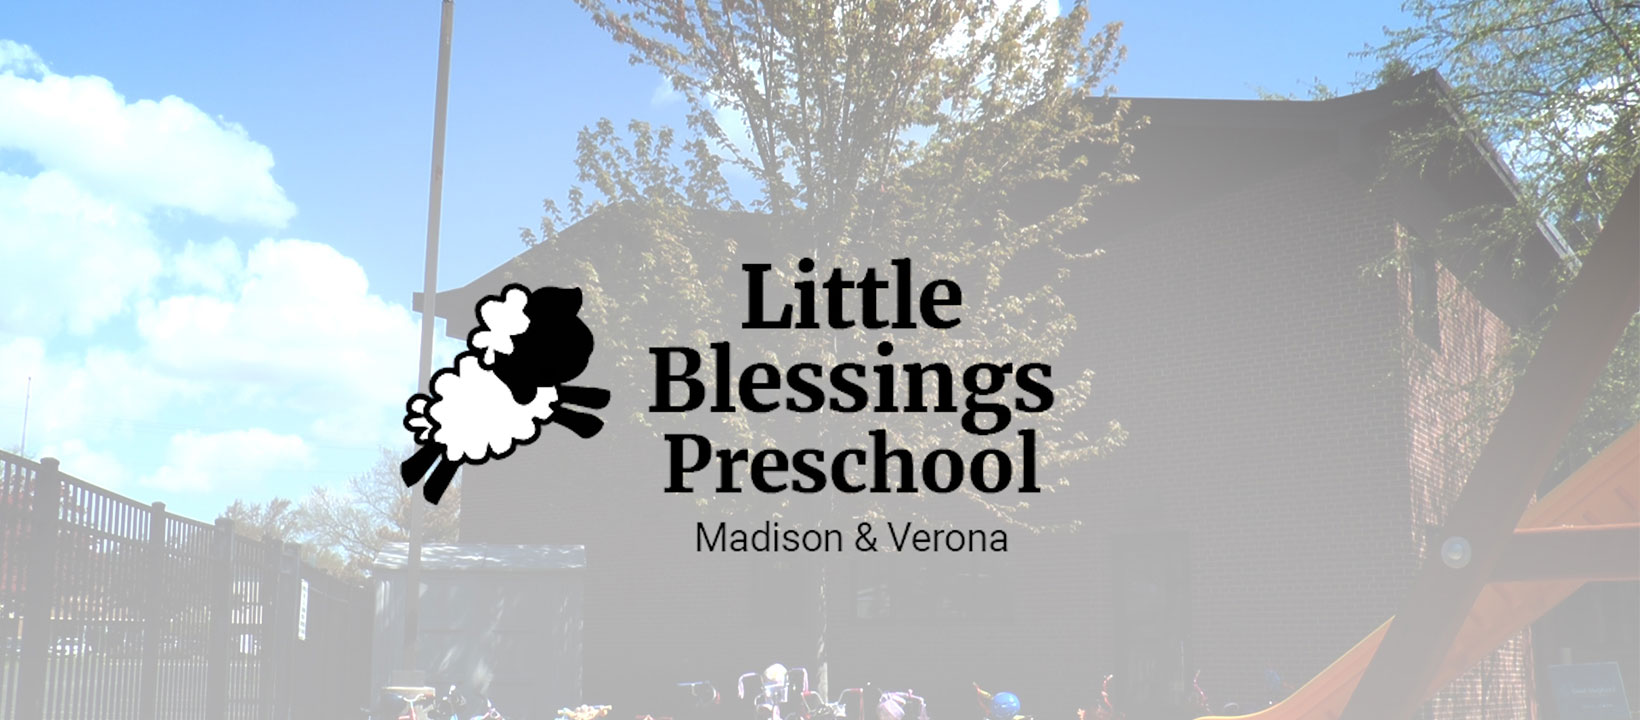 Little Blessings Preschool